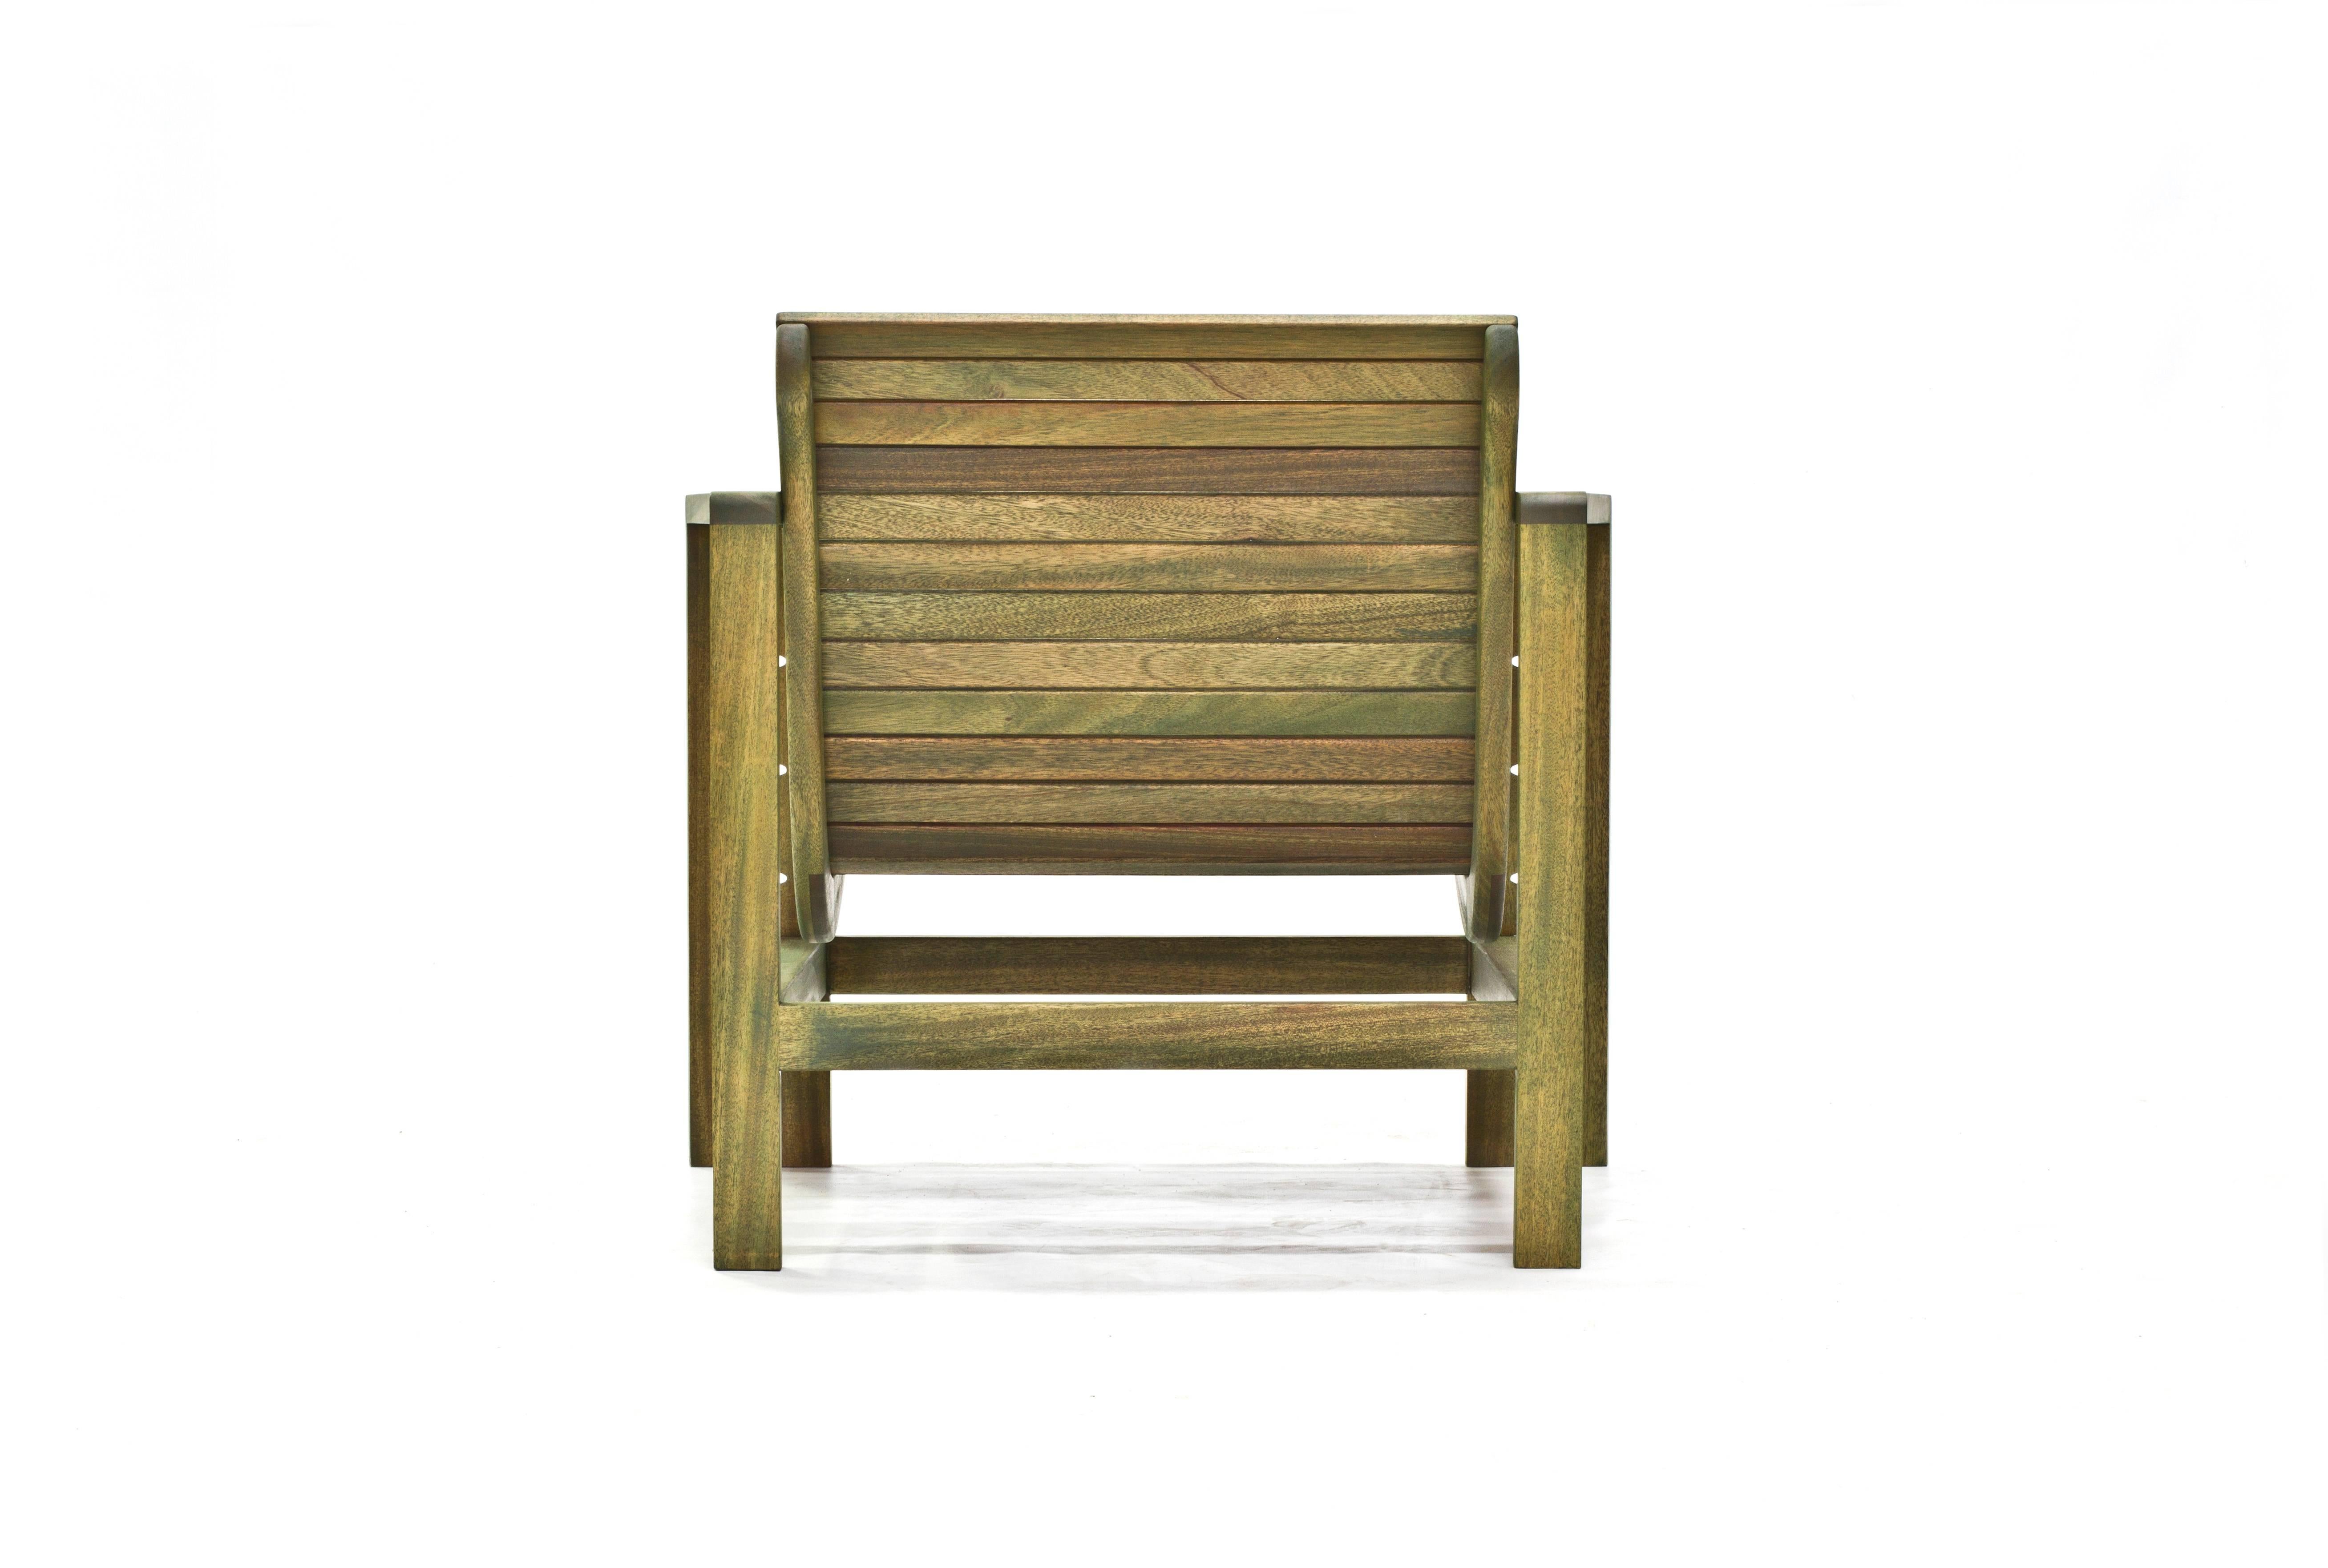 American Uti 'Ooh-Tee' Lounge Chair in Mahogany with Sage Finish, Wooda Original For Sale